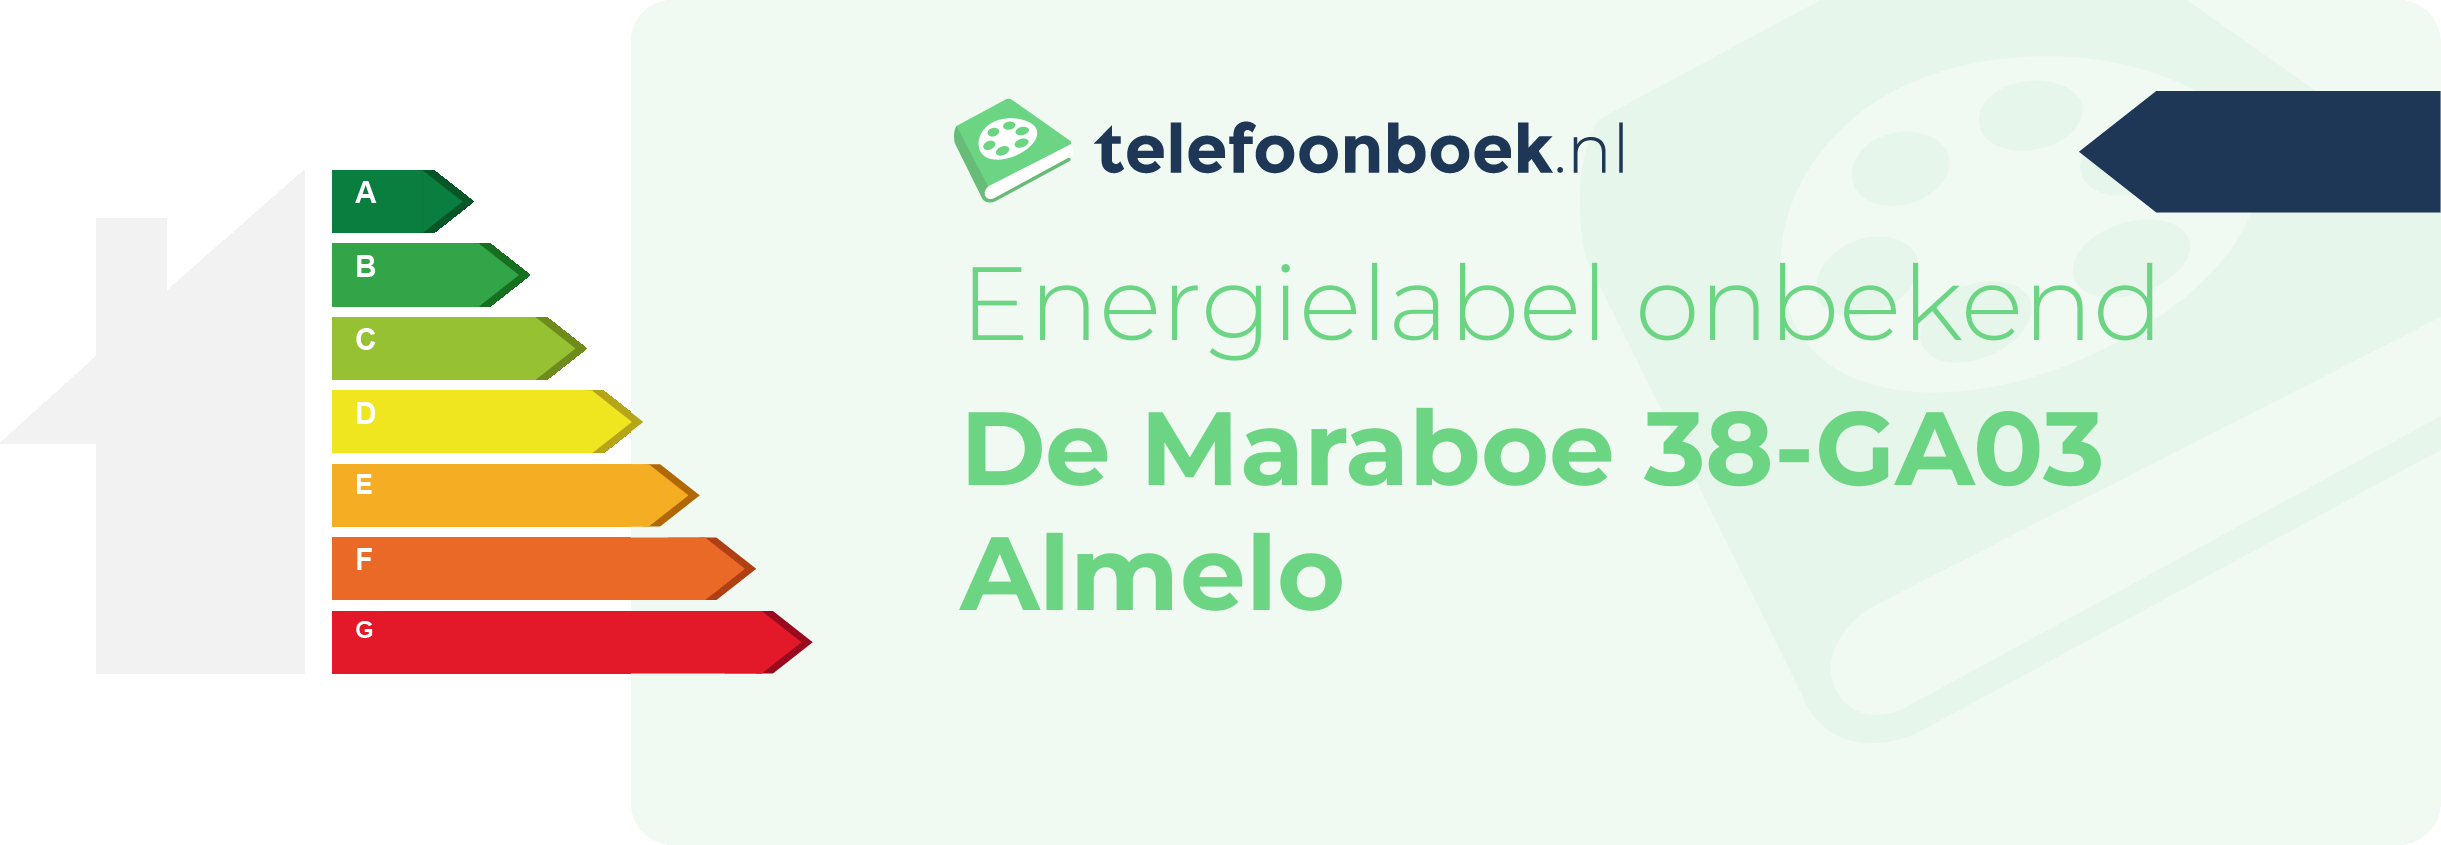 Energielabel De Maraboe 38-GA03 Almelo